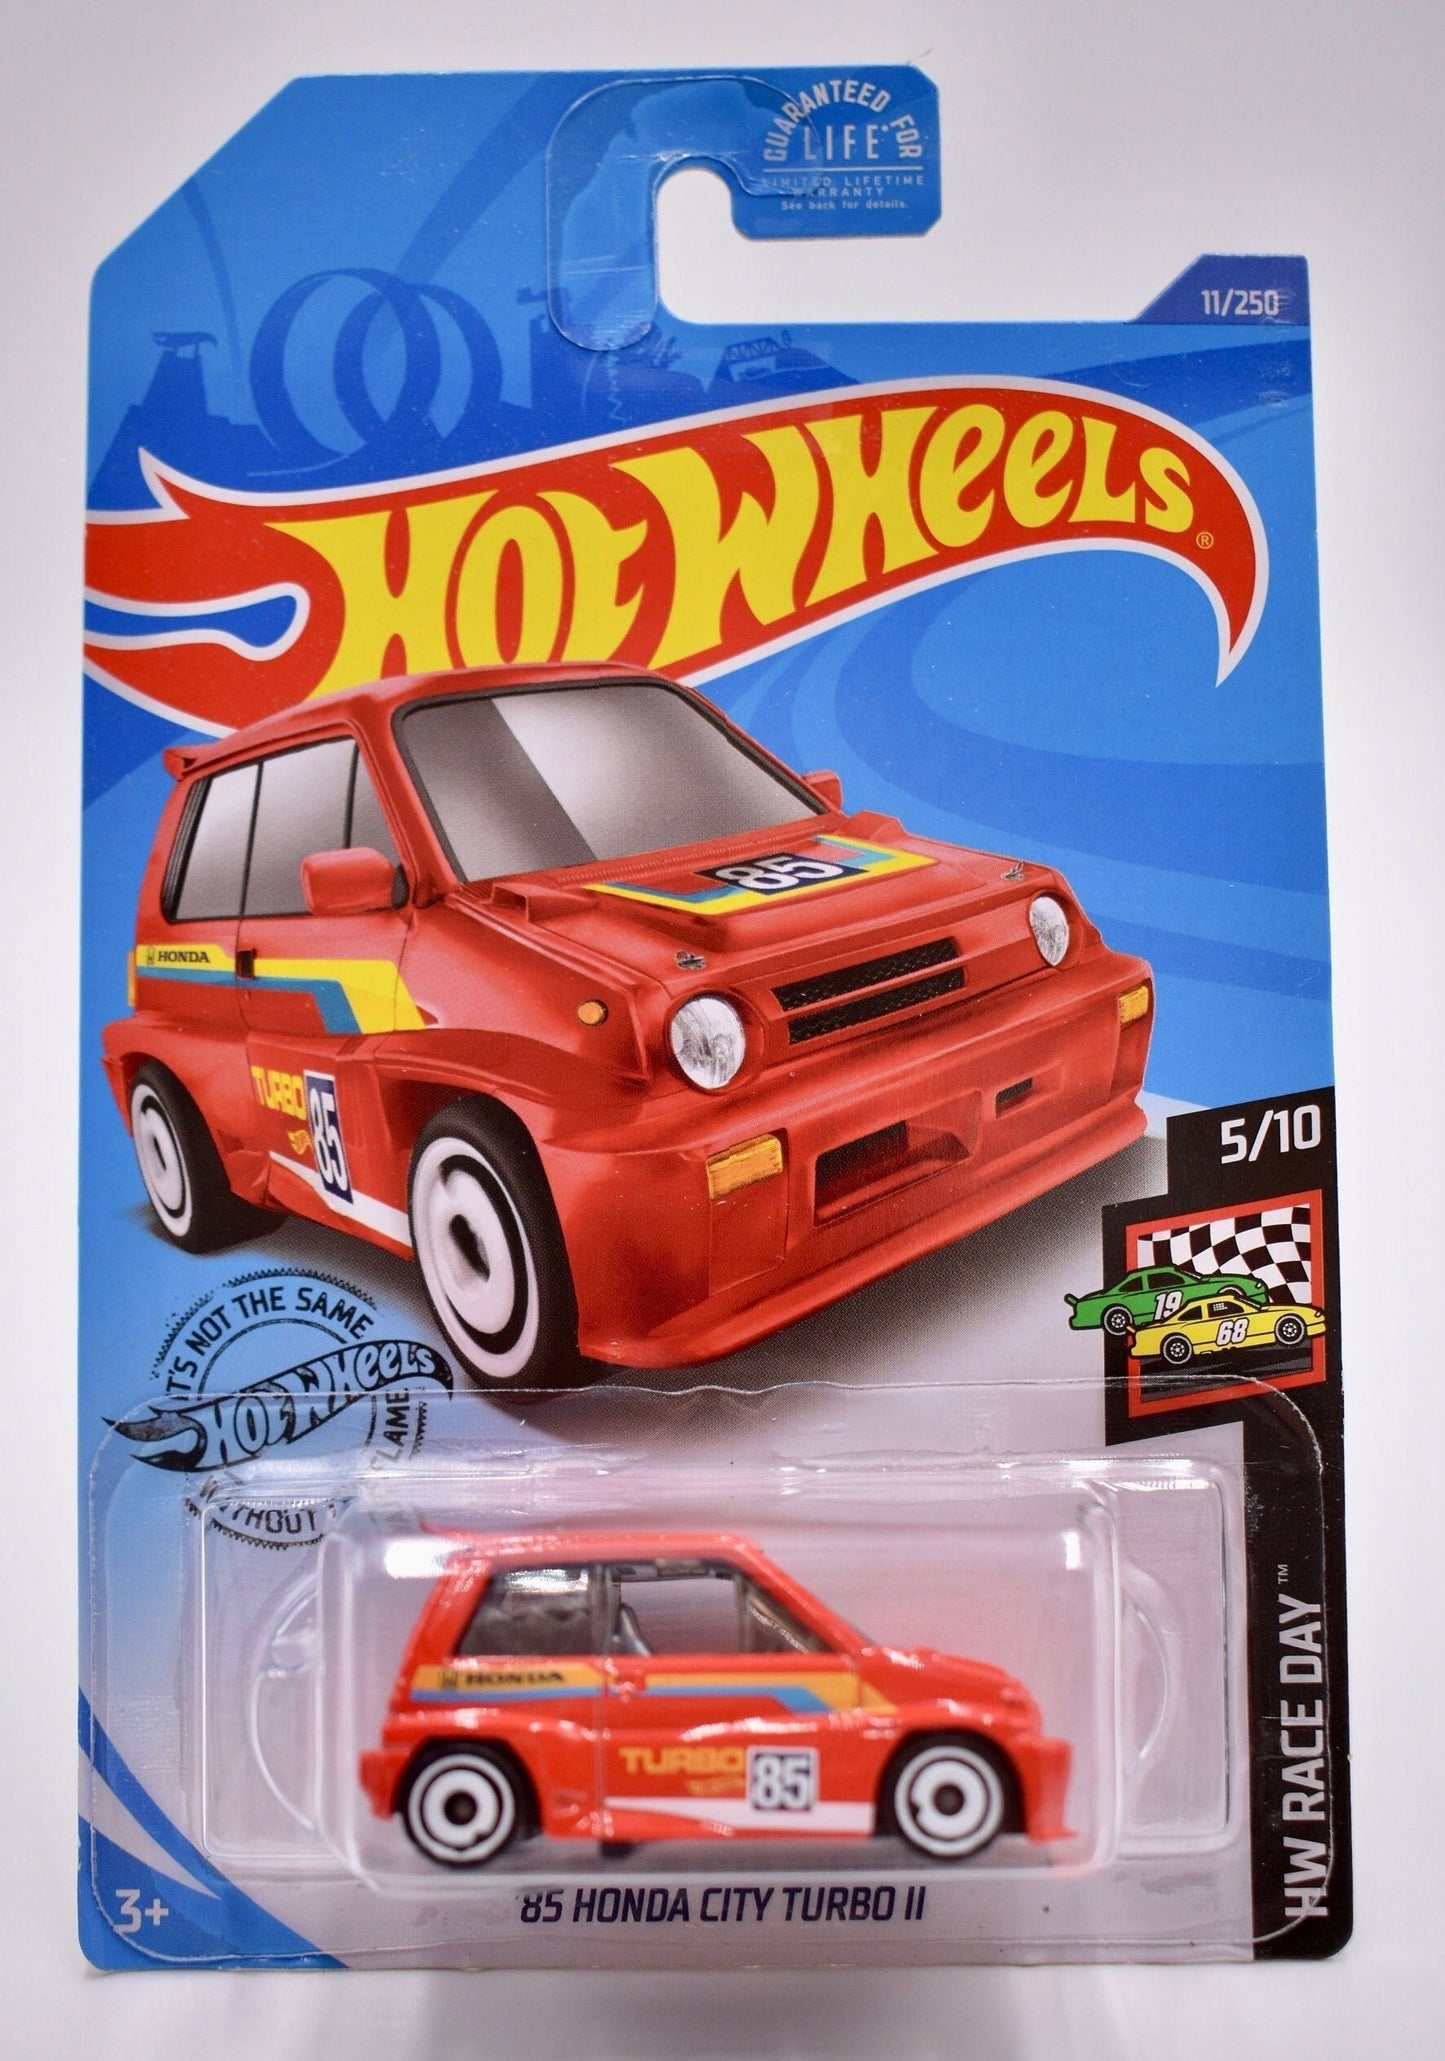 Hot Wheels '85 Honda City Turbo II Red HW Race Day Perfect Birthday Gift Miniature Model Toy Car